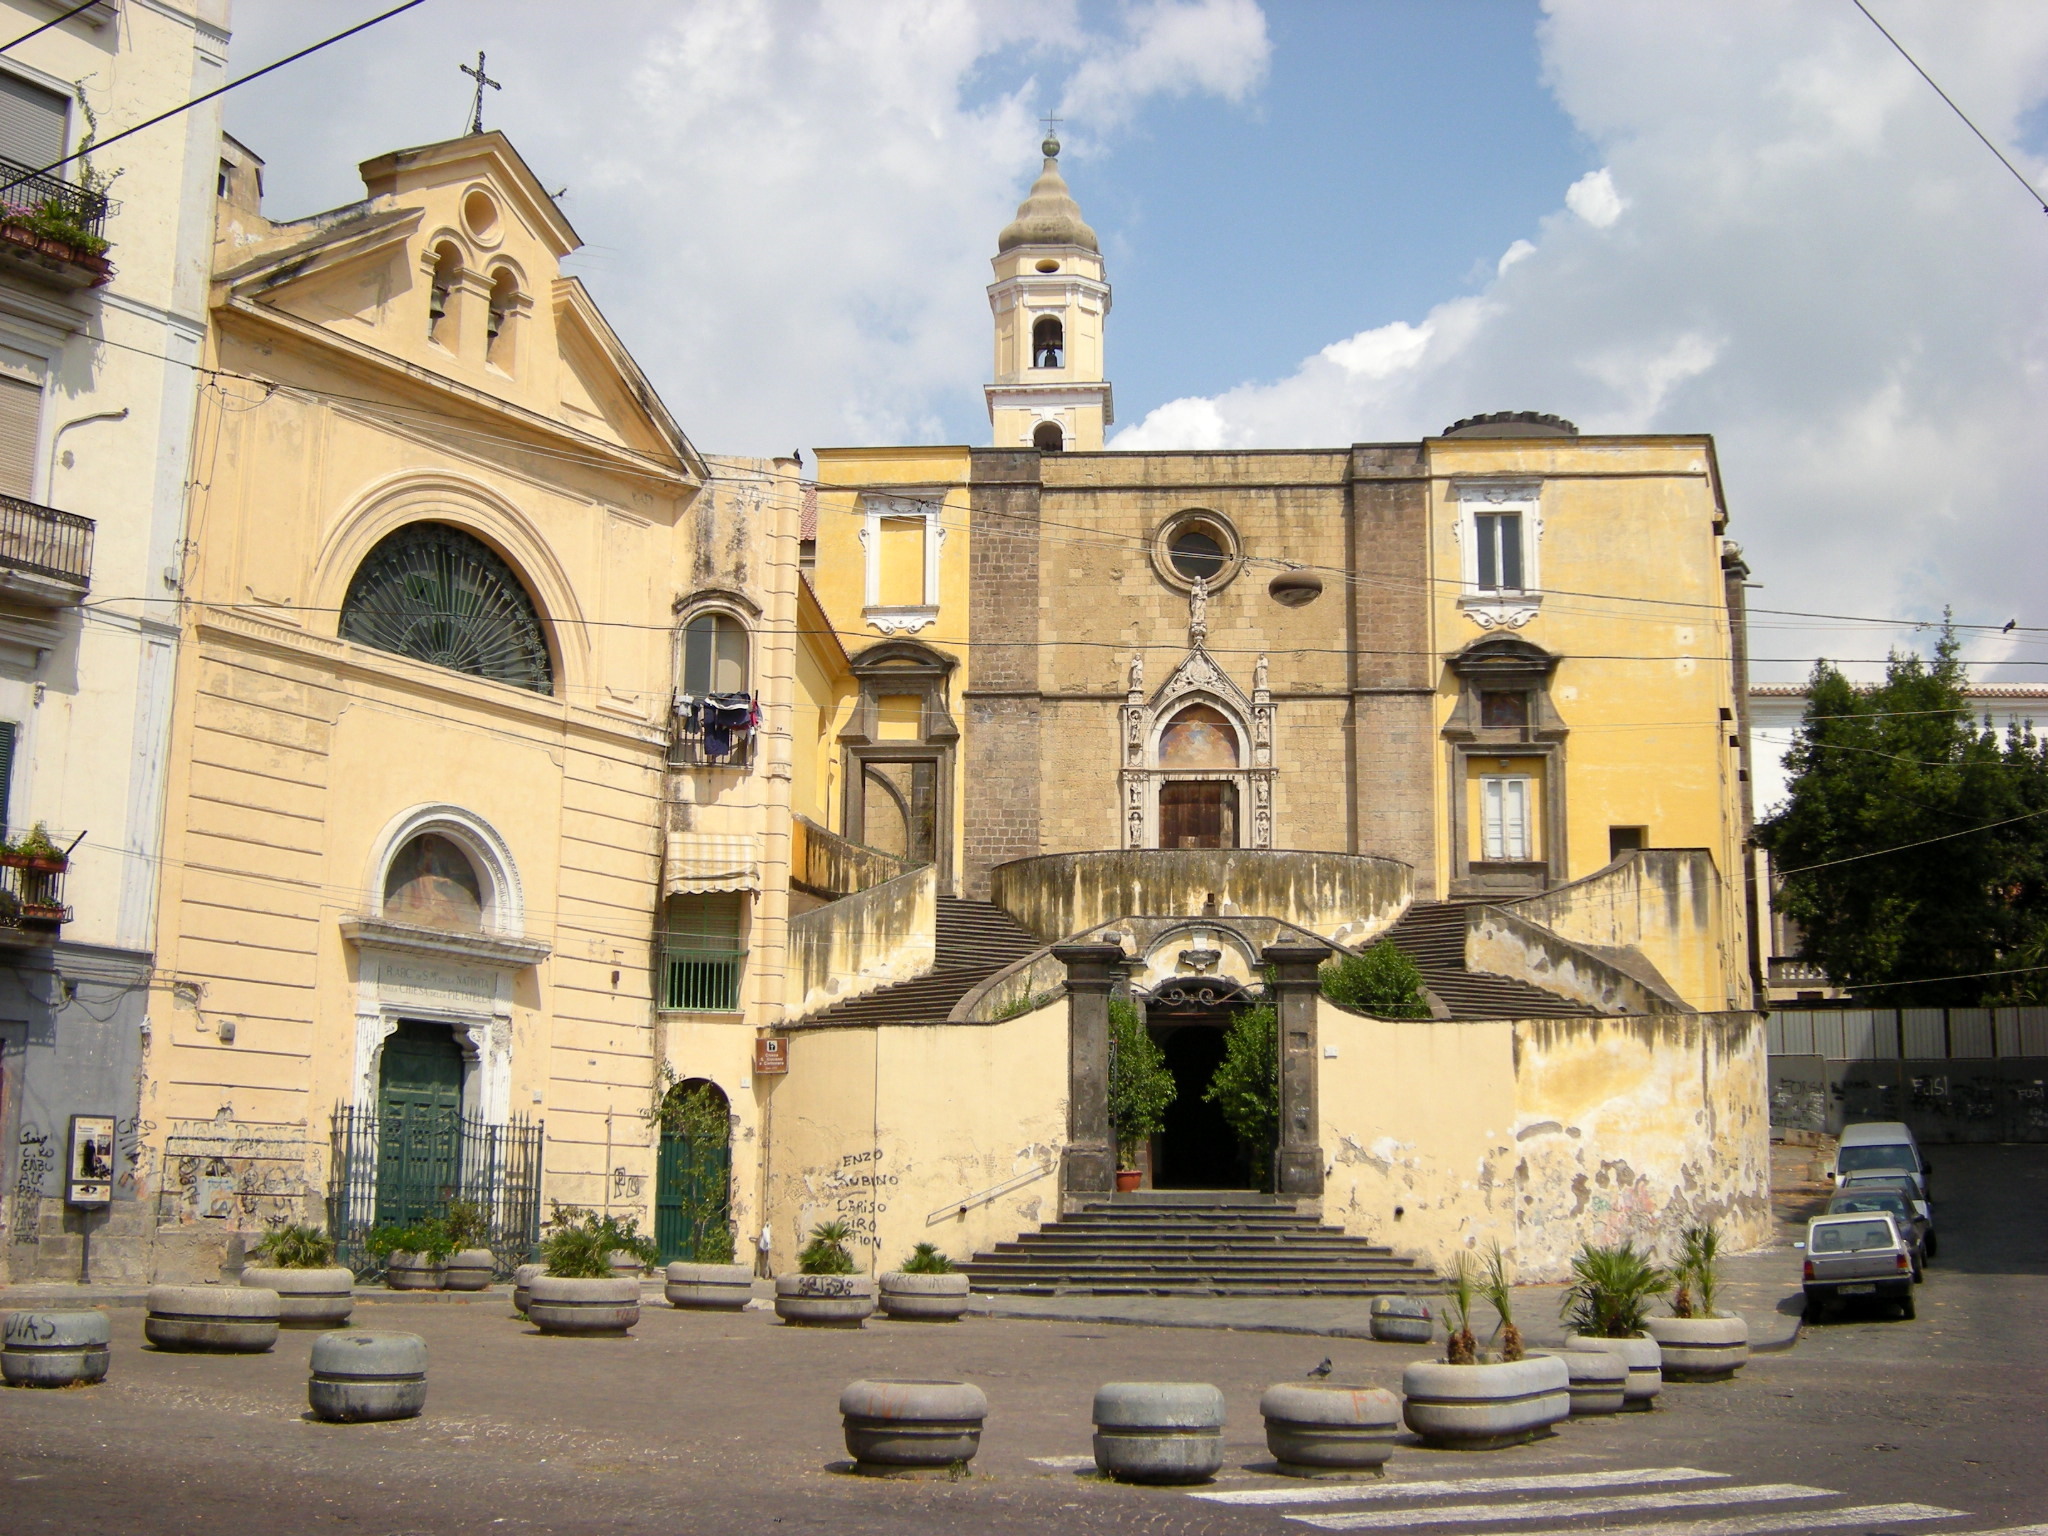 Carbonara 的圣乔瓦尼教堂在停工 18 个月后重新开放